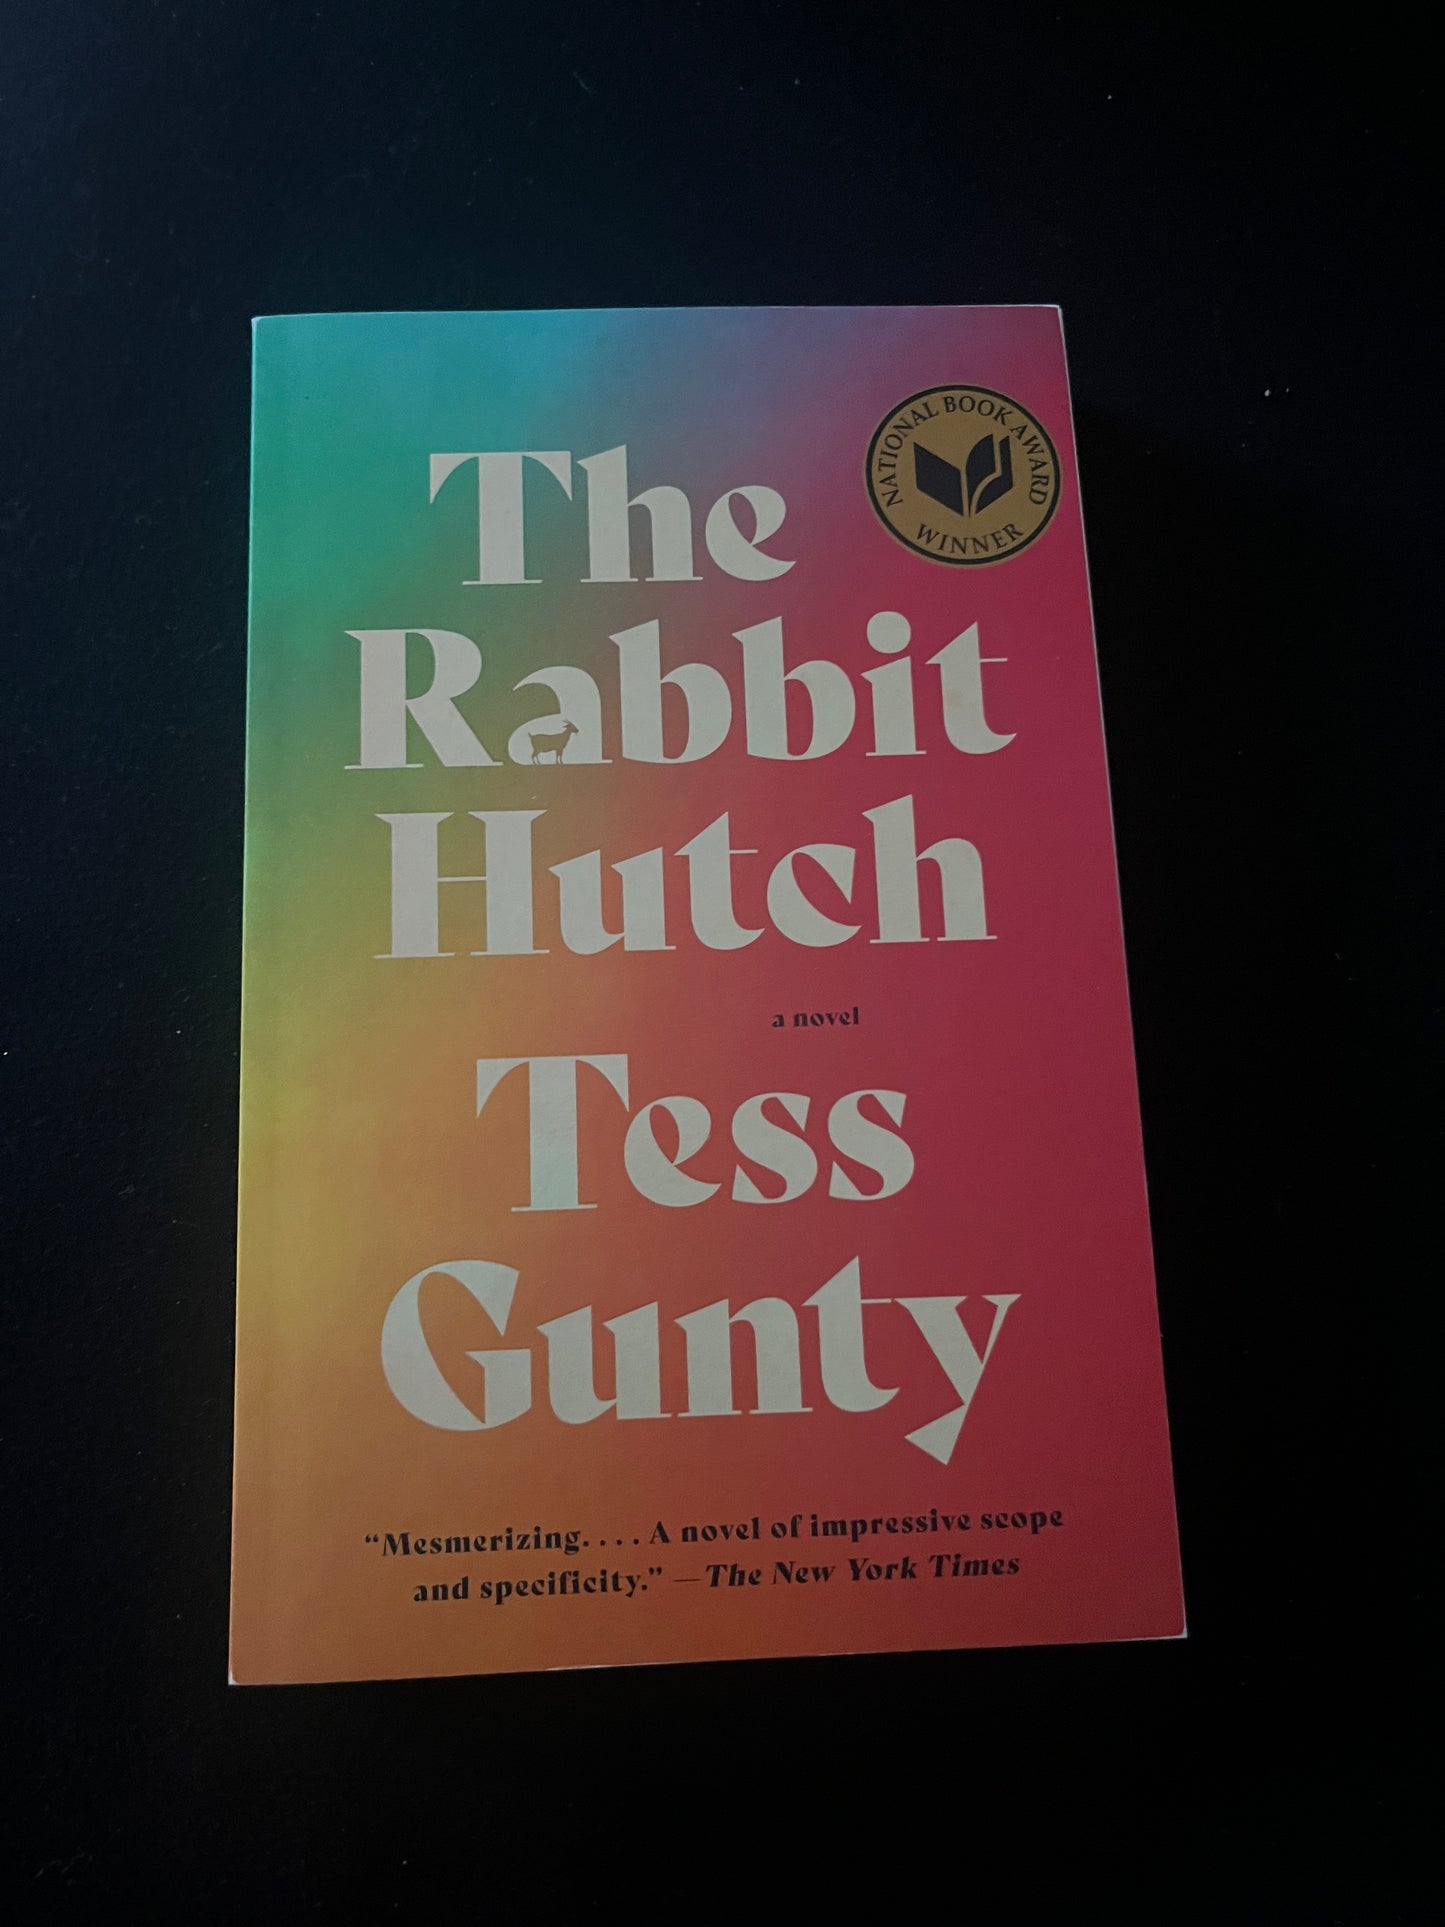 THE RABBIT HUTCH by Tess Gunty